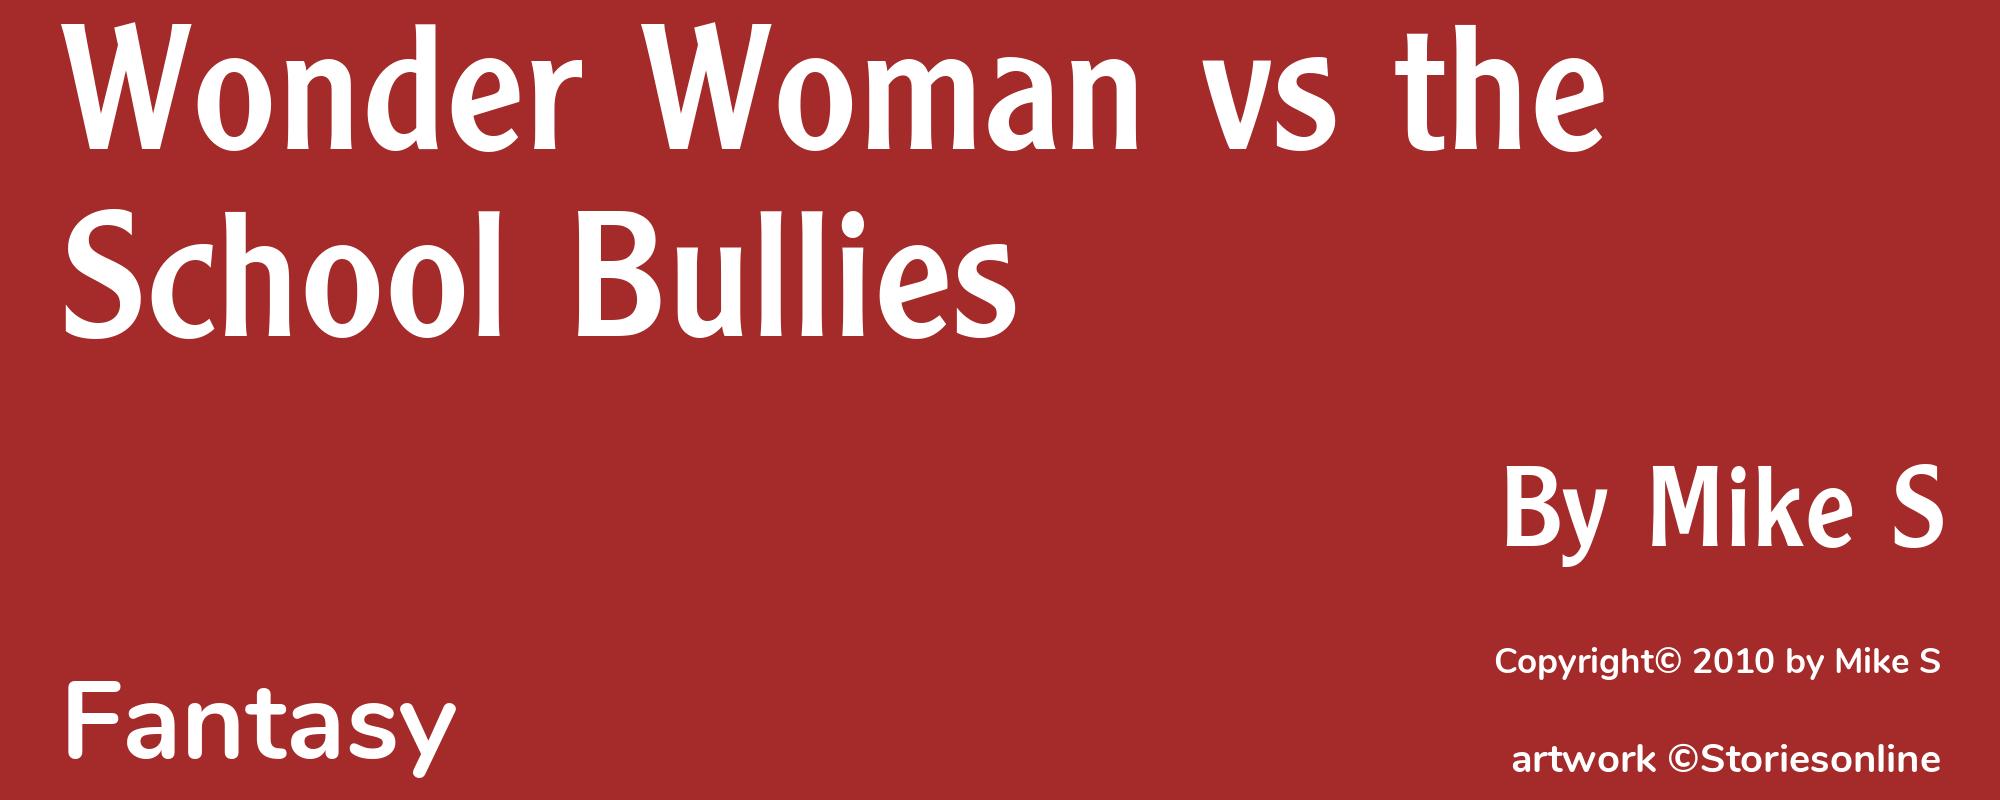 Wonder Woman vs the School Bullies - Cover